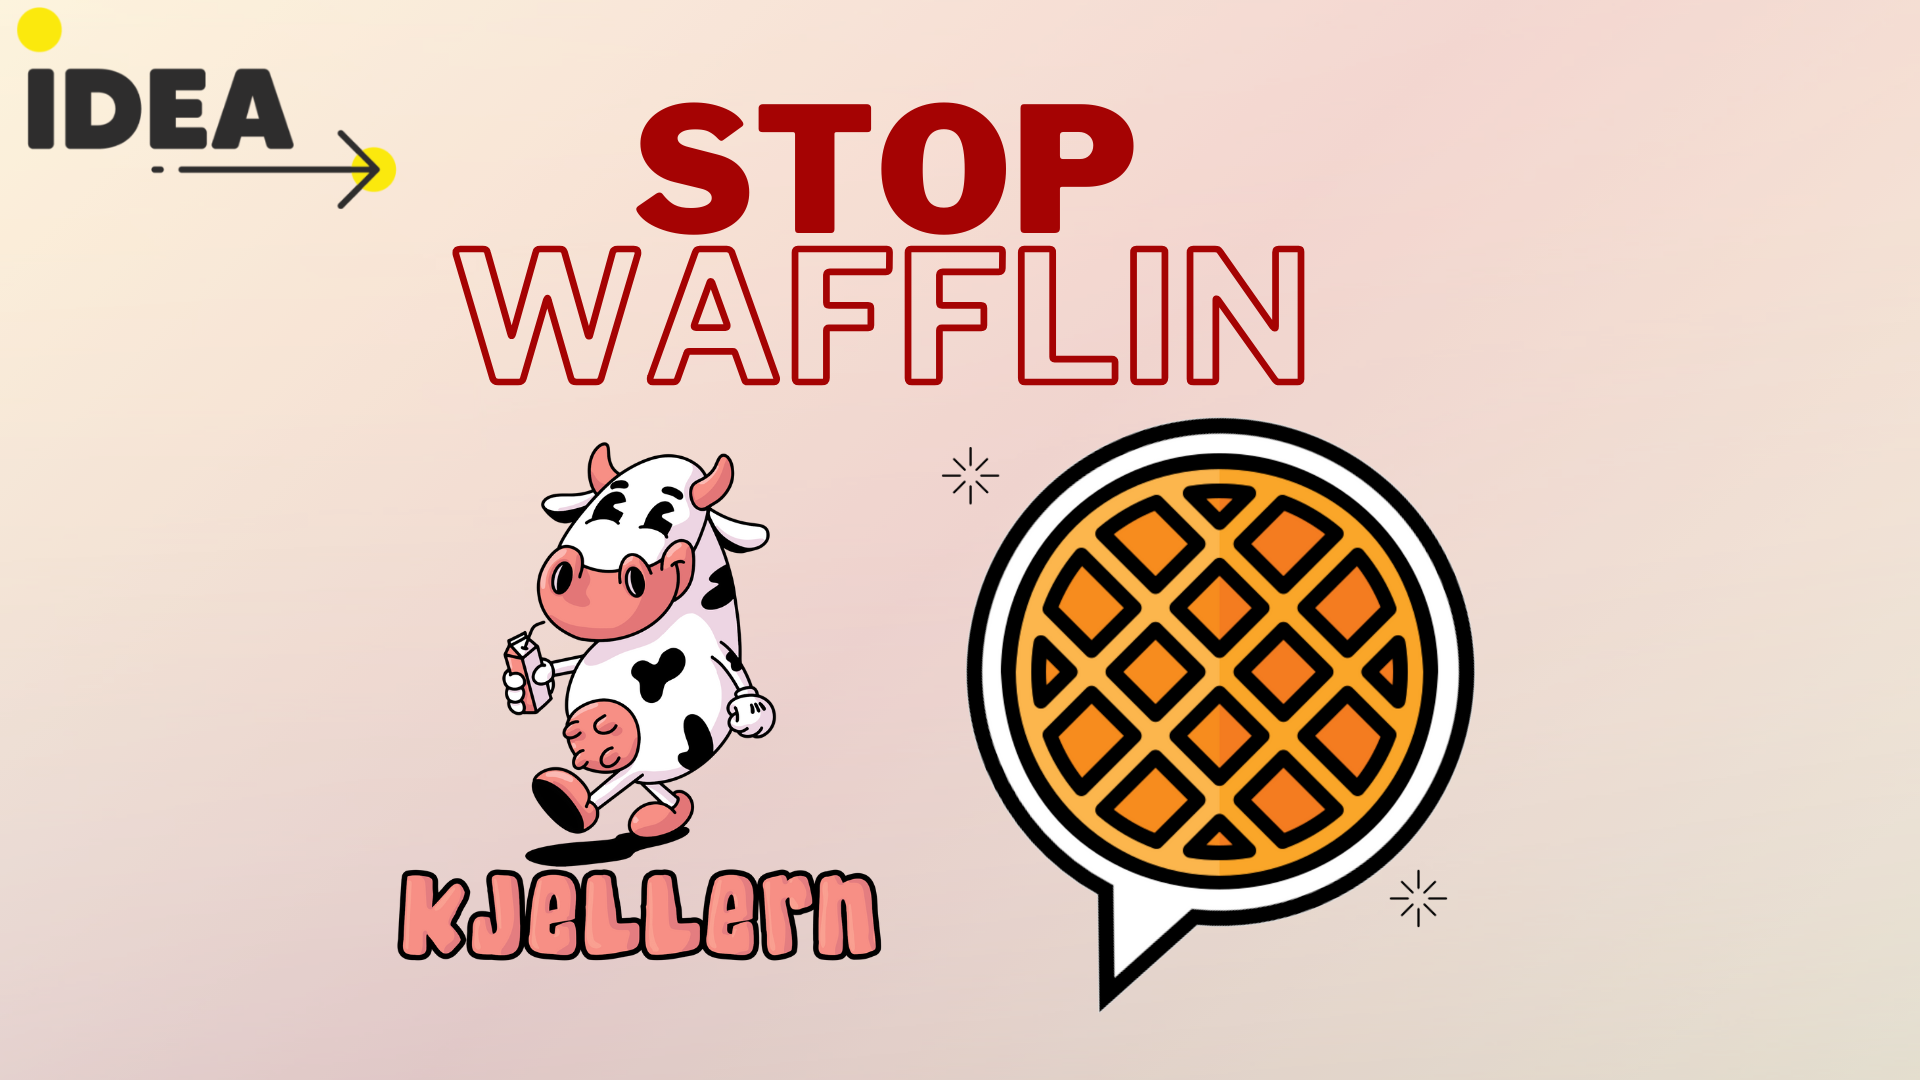 A waffle icon and cow from Kjeller'n logo underneath "Stop Wafflin" headline. IDEA logo in the upper left corner. 